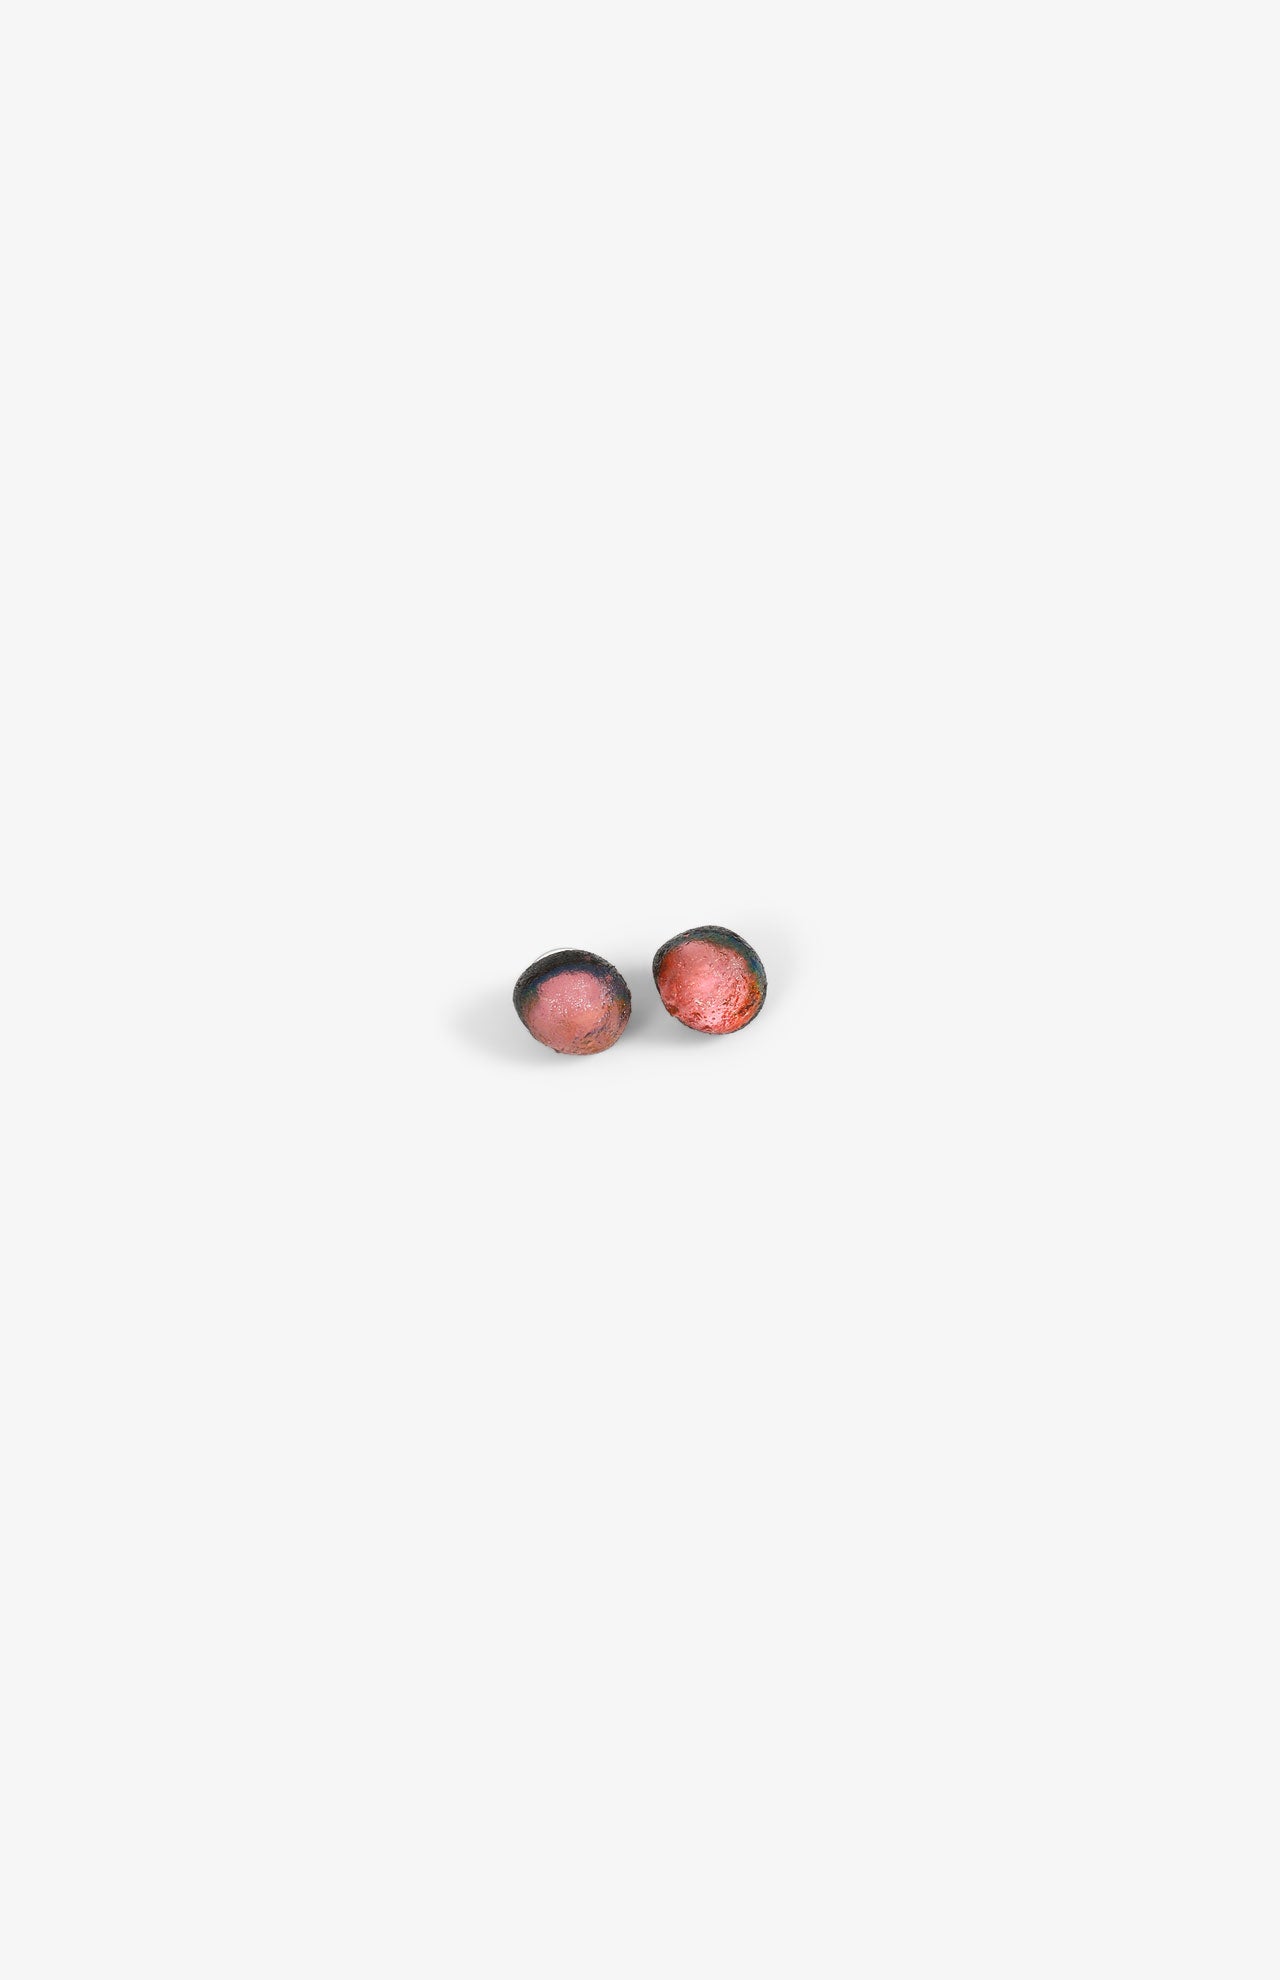 Boucles d'oreilles Simple Météorite - Rose Fond Noir - Fermoir Argent